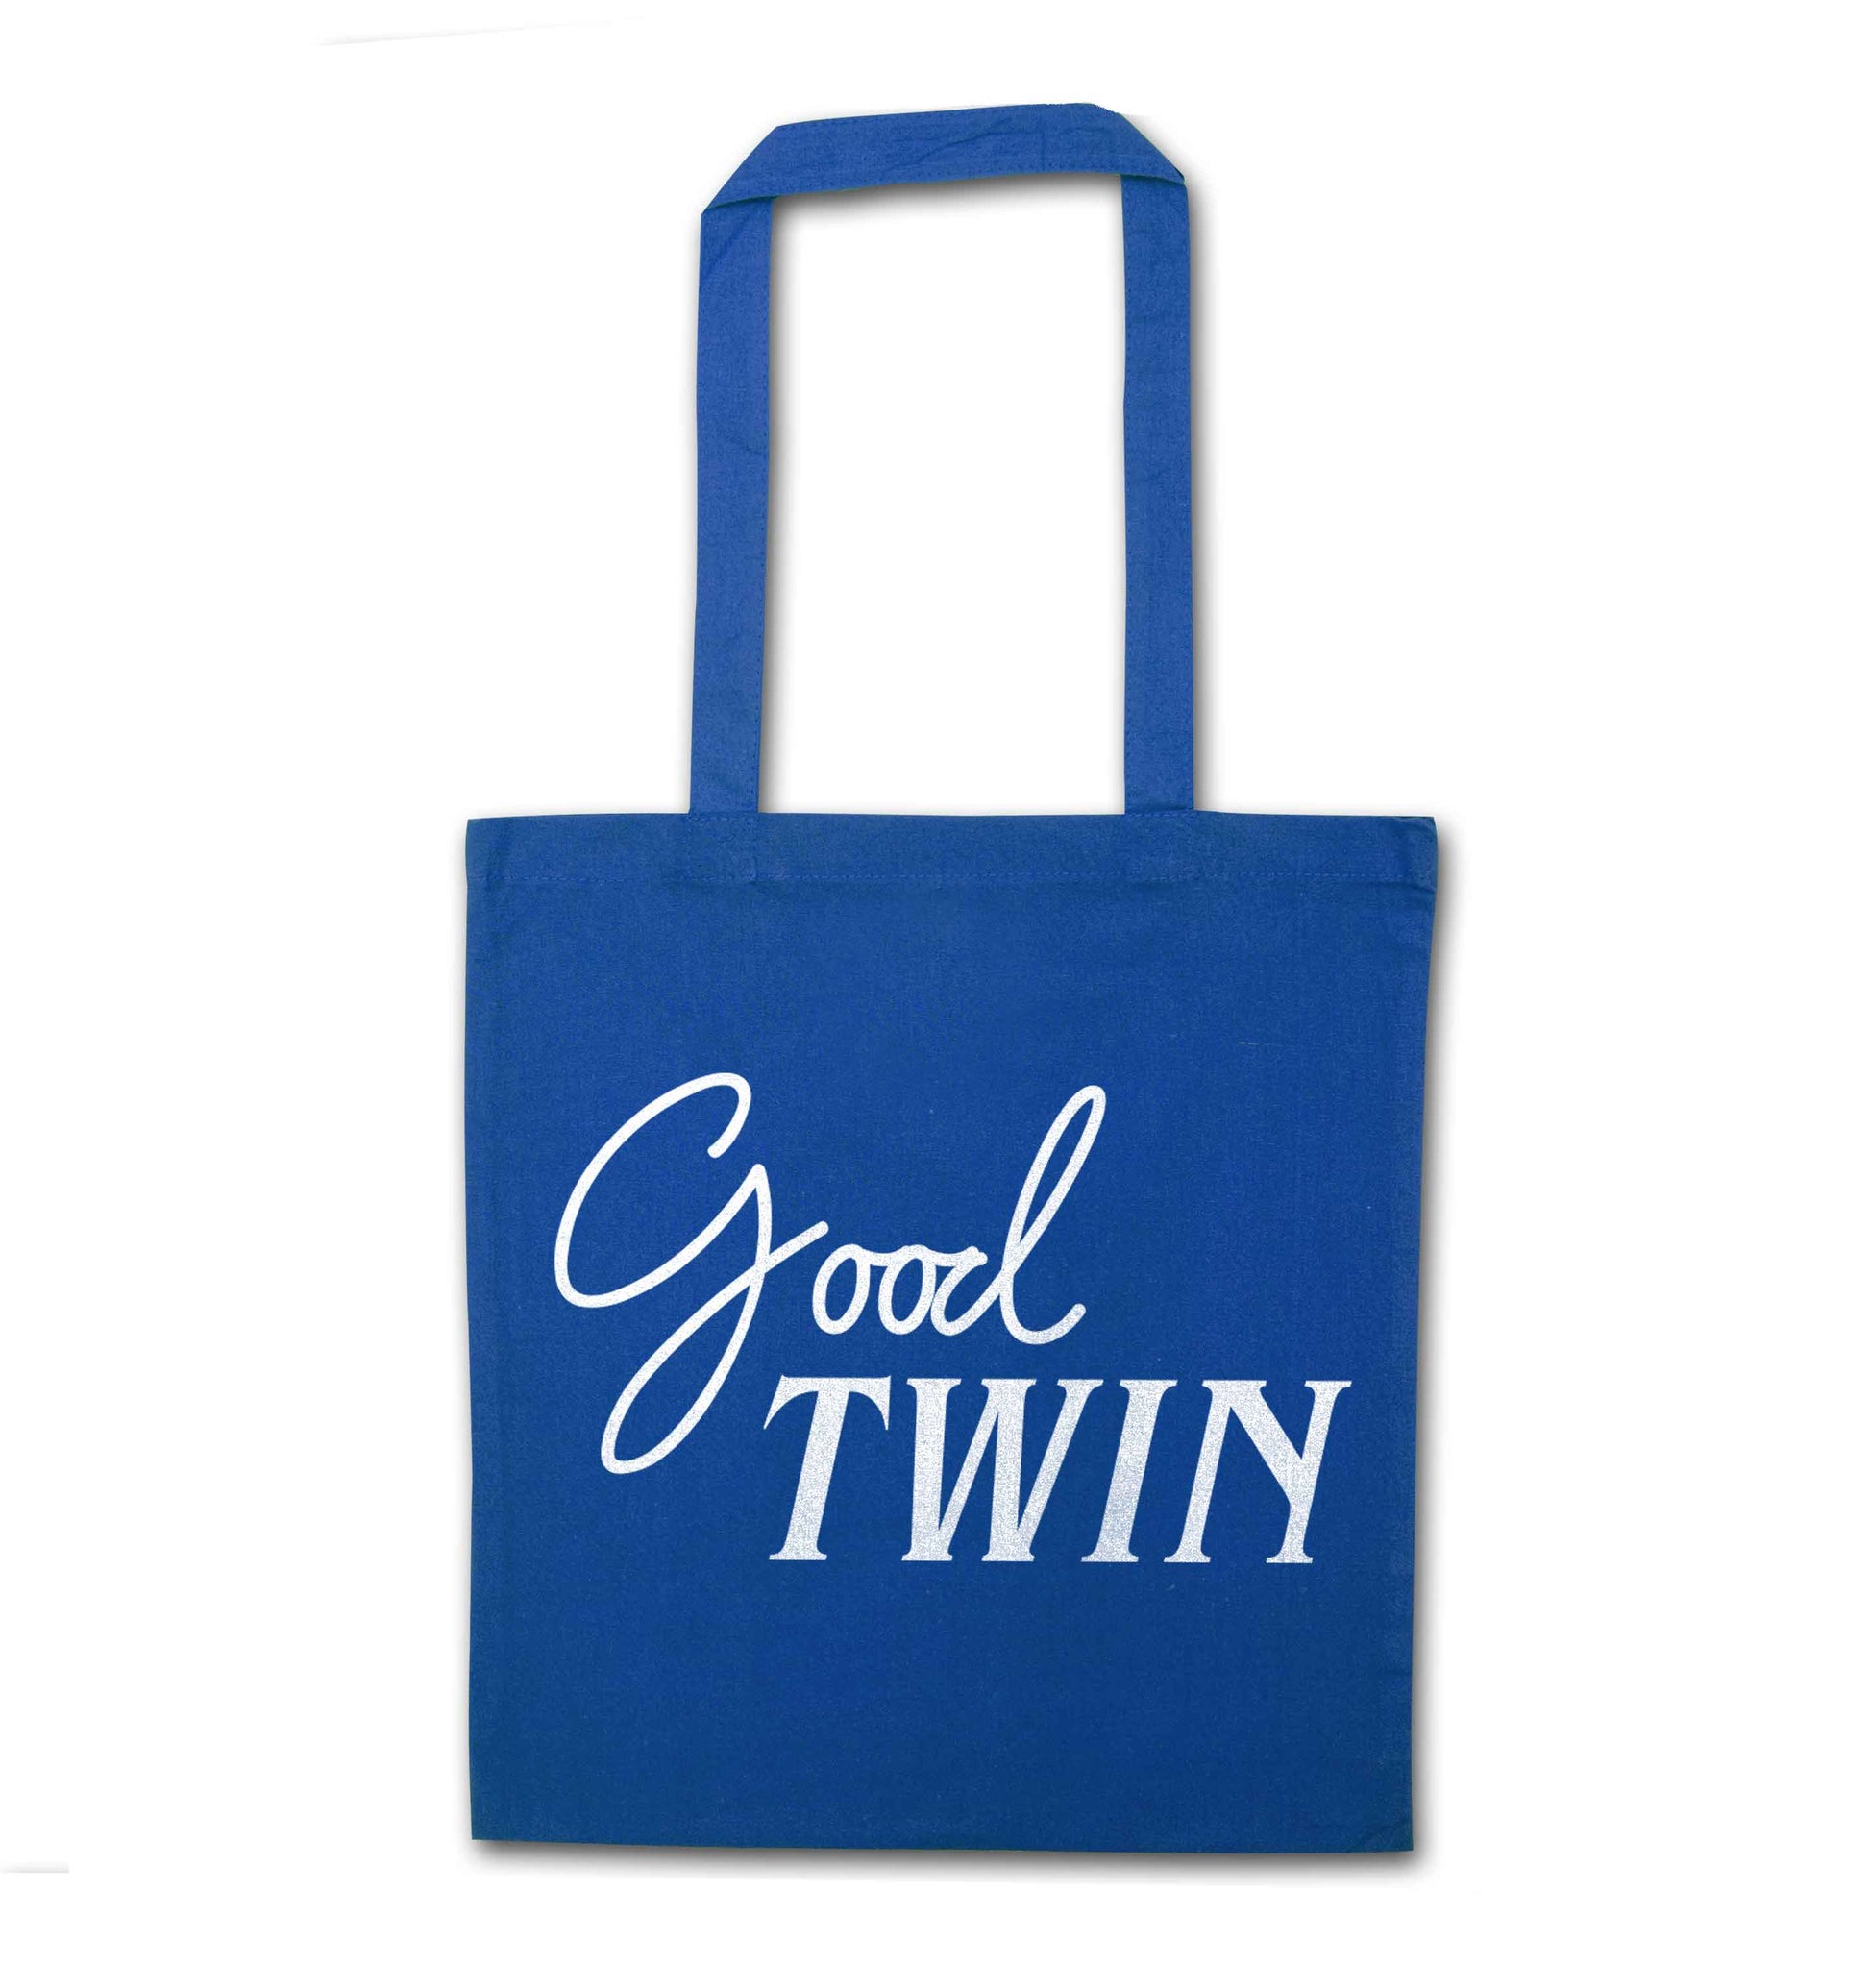 Good twin blue tote bag